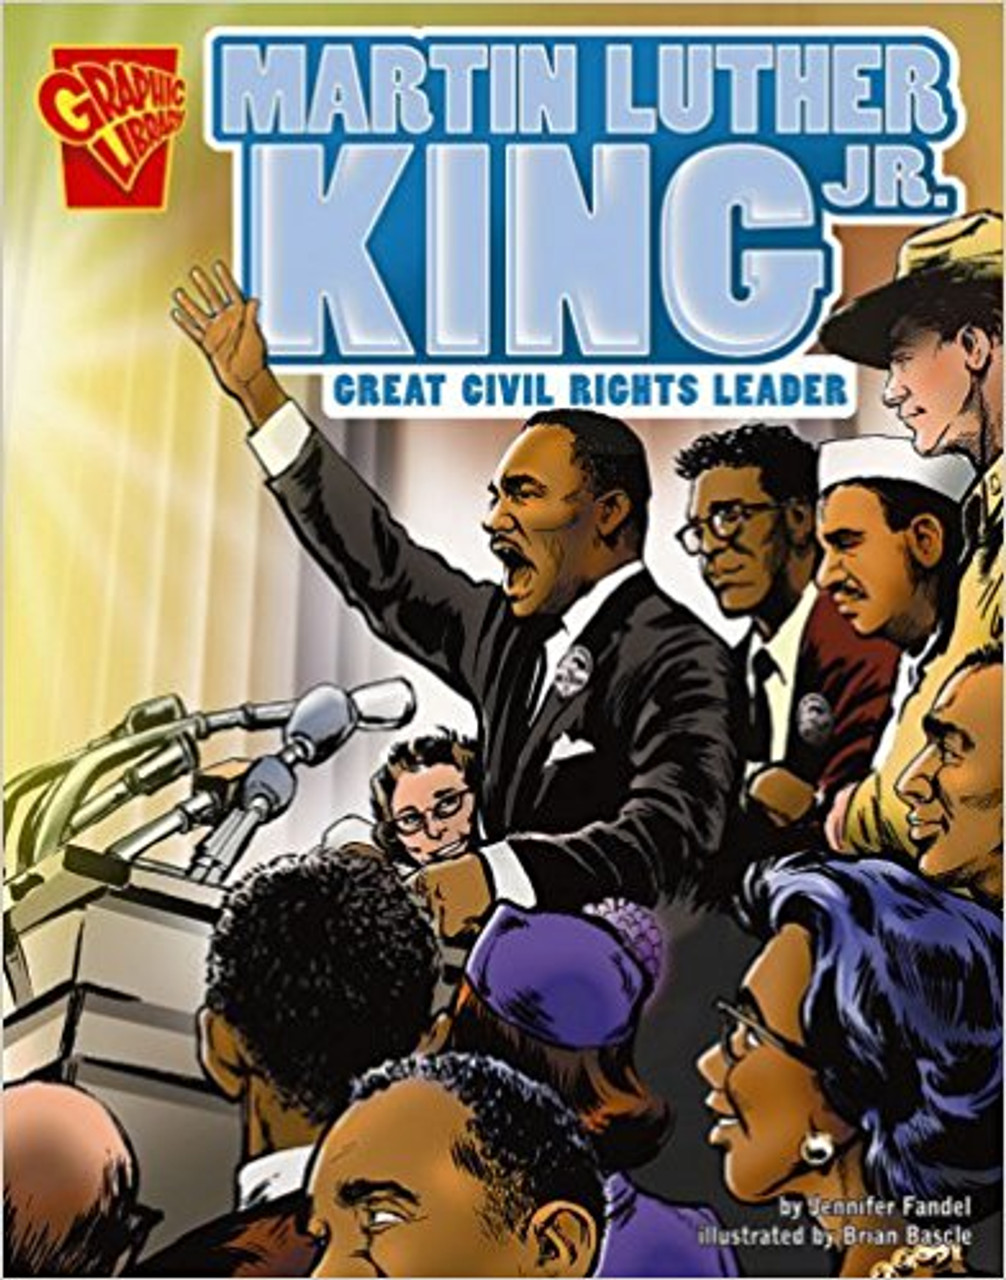 Martin Luther King Jr.: Great Civil Rights Leader by Jennifer Fandel